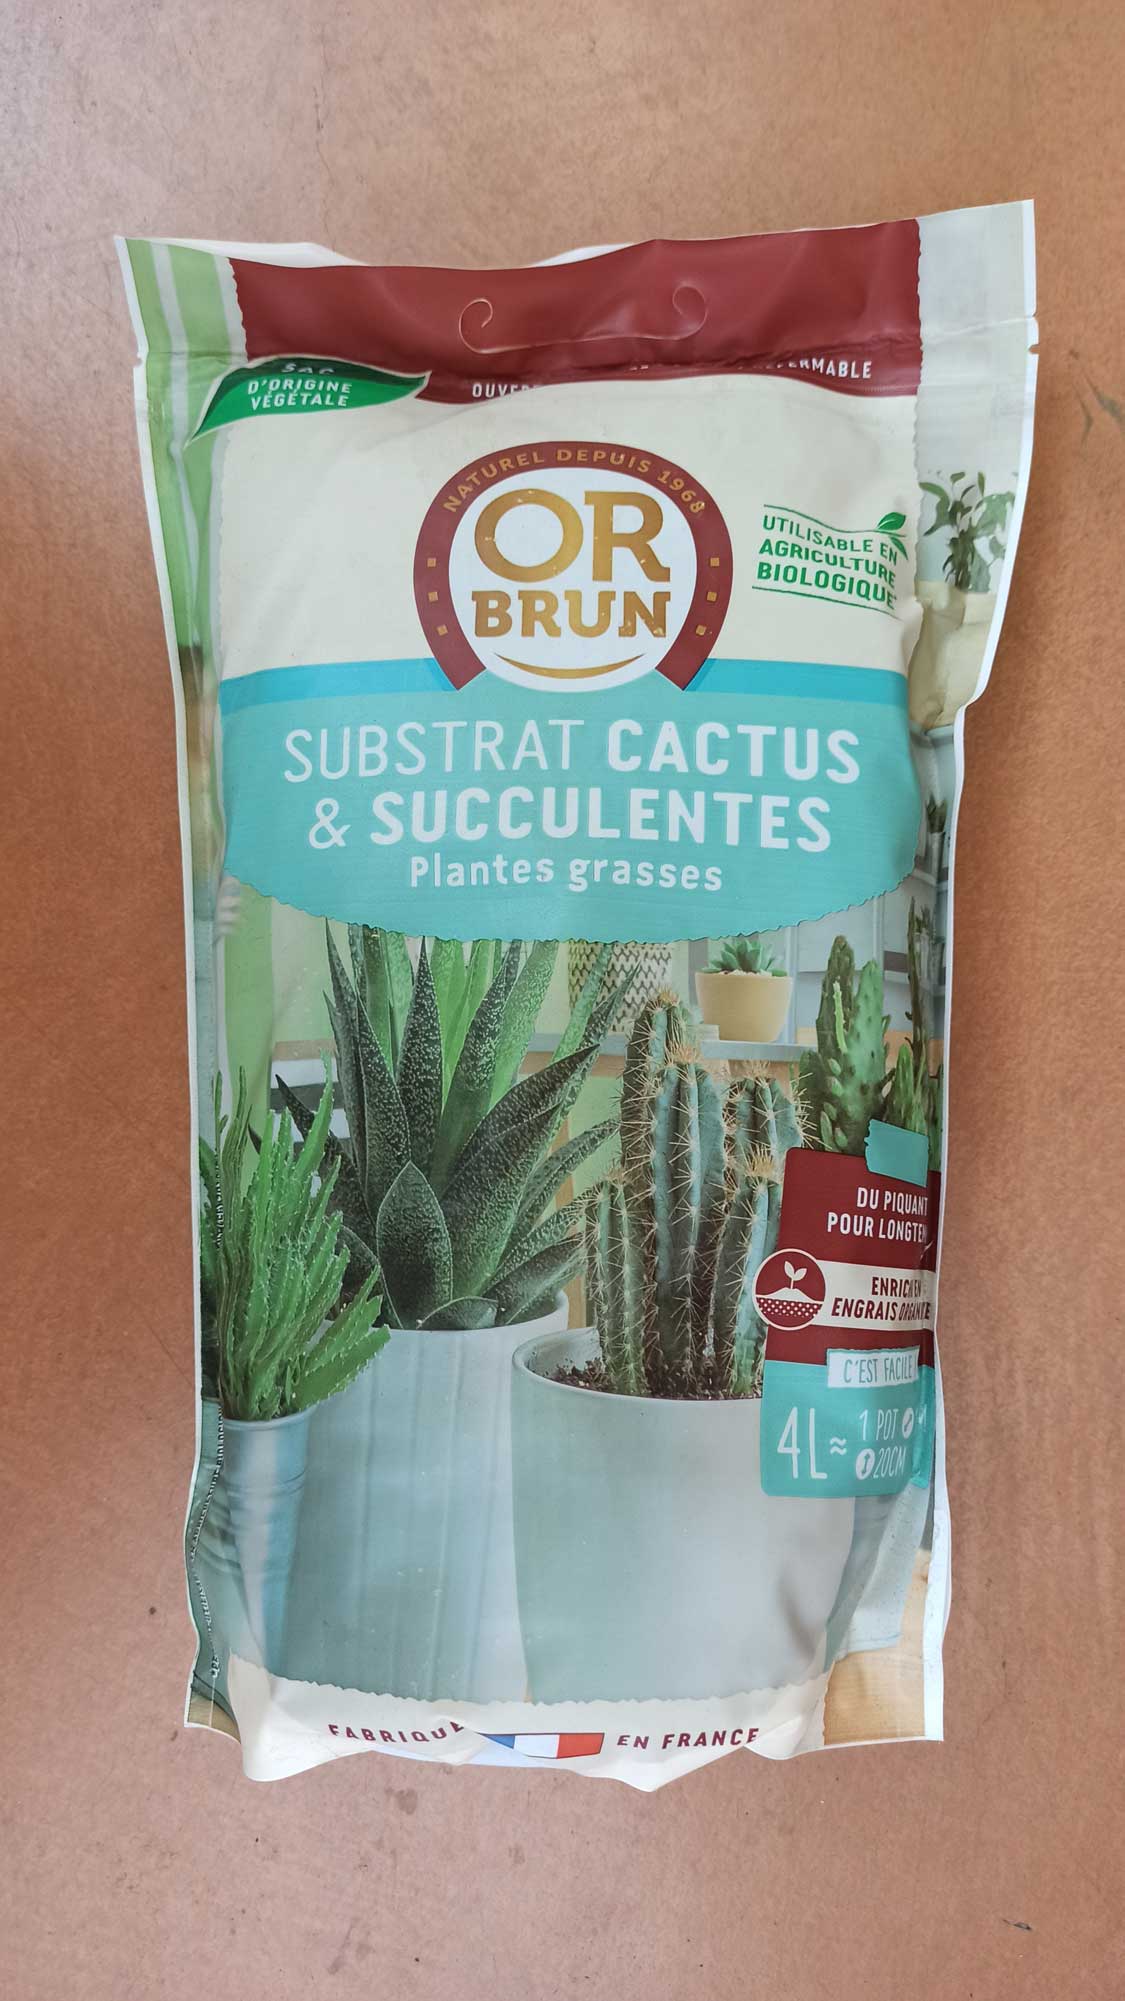 https://www.jardipradel.com/wp-content/uploads/2020/11/Substrat-cactus-et-succulentes-Or-brun-Terreau-Produits-Jardi-Pradel-2.jpg